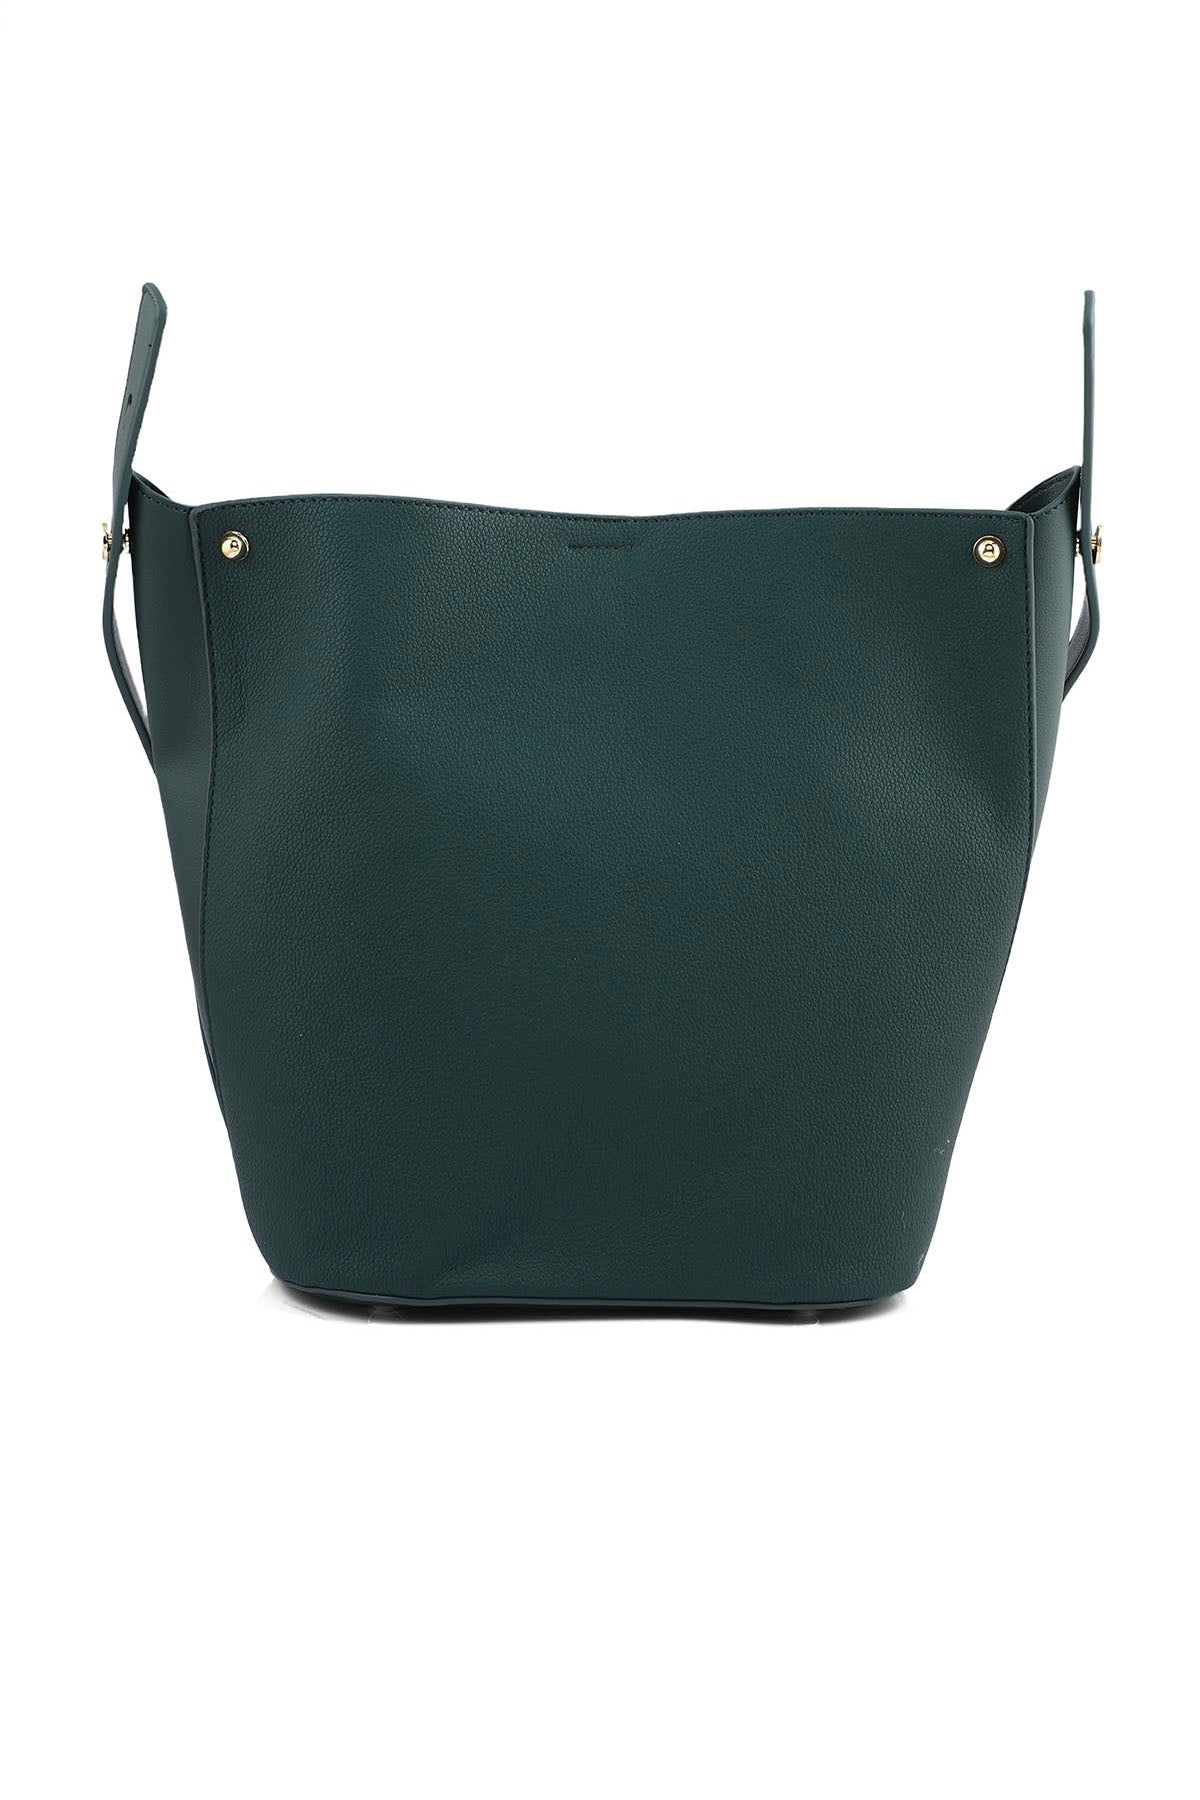 Bucket Hand Bags B15134-Green